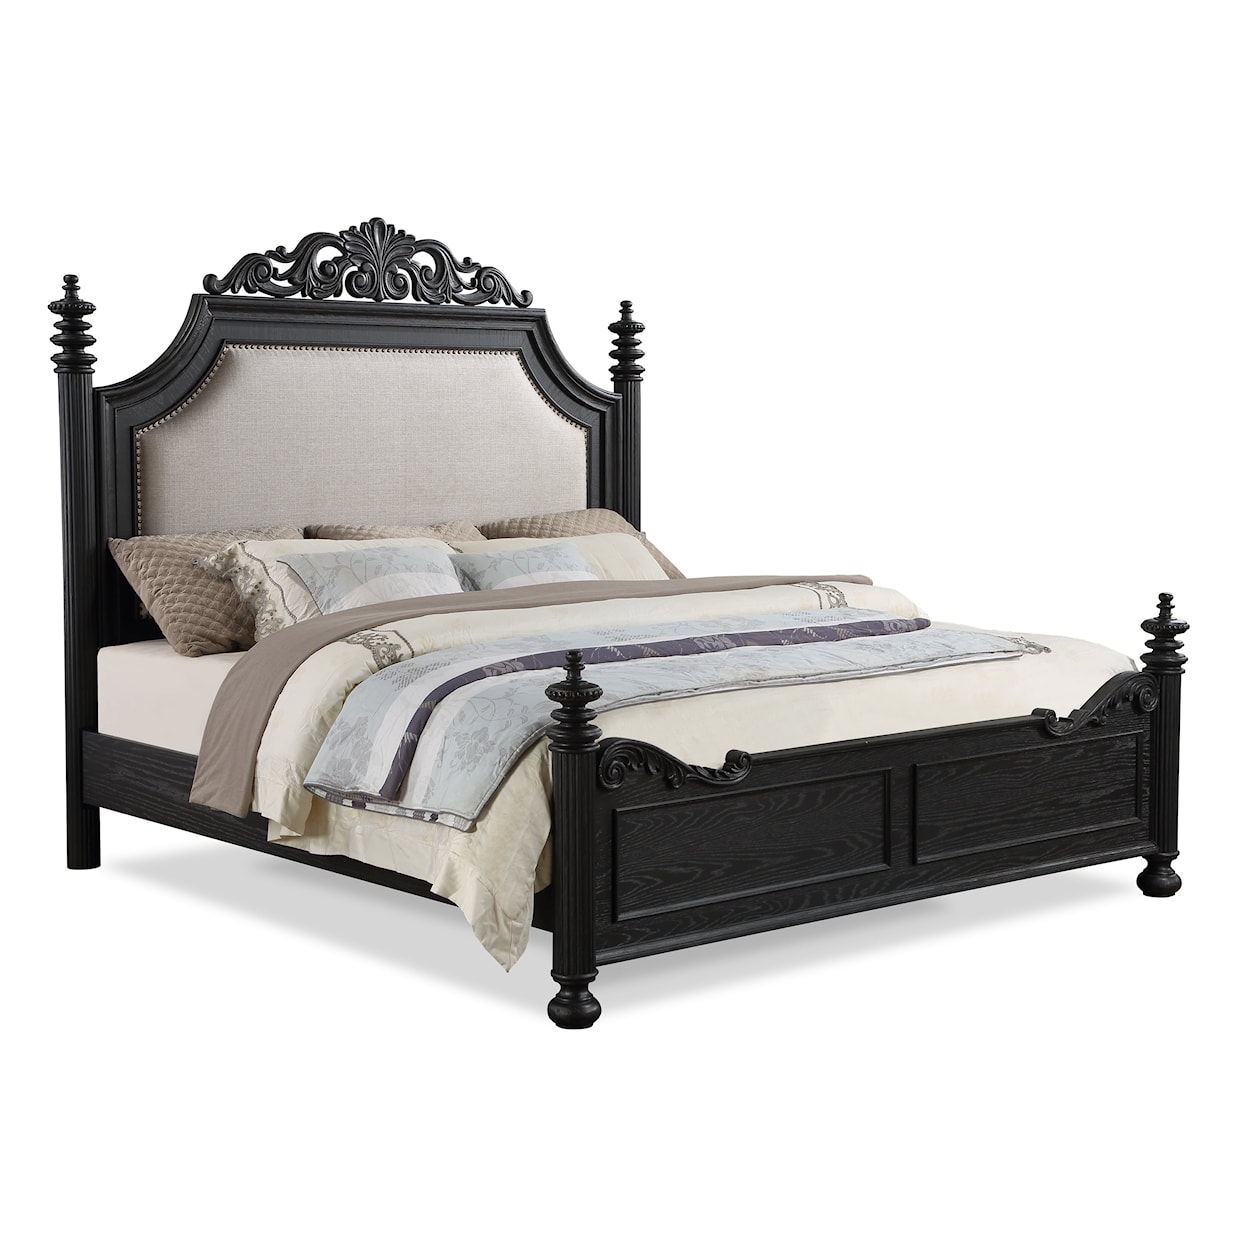 CM KINGSBURY King Upholstered Bed